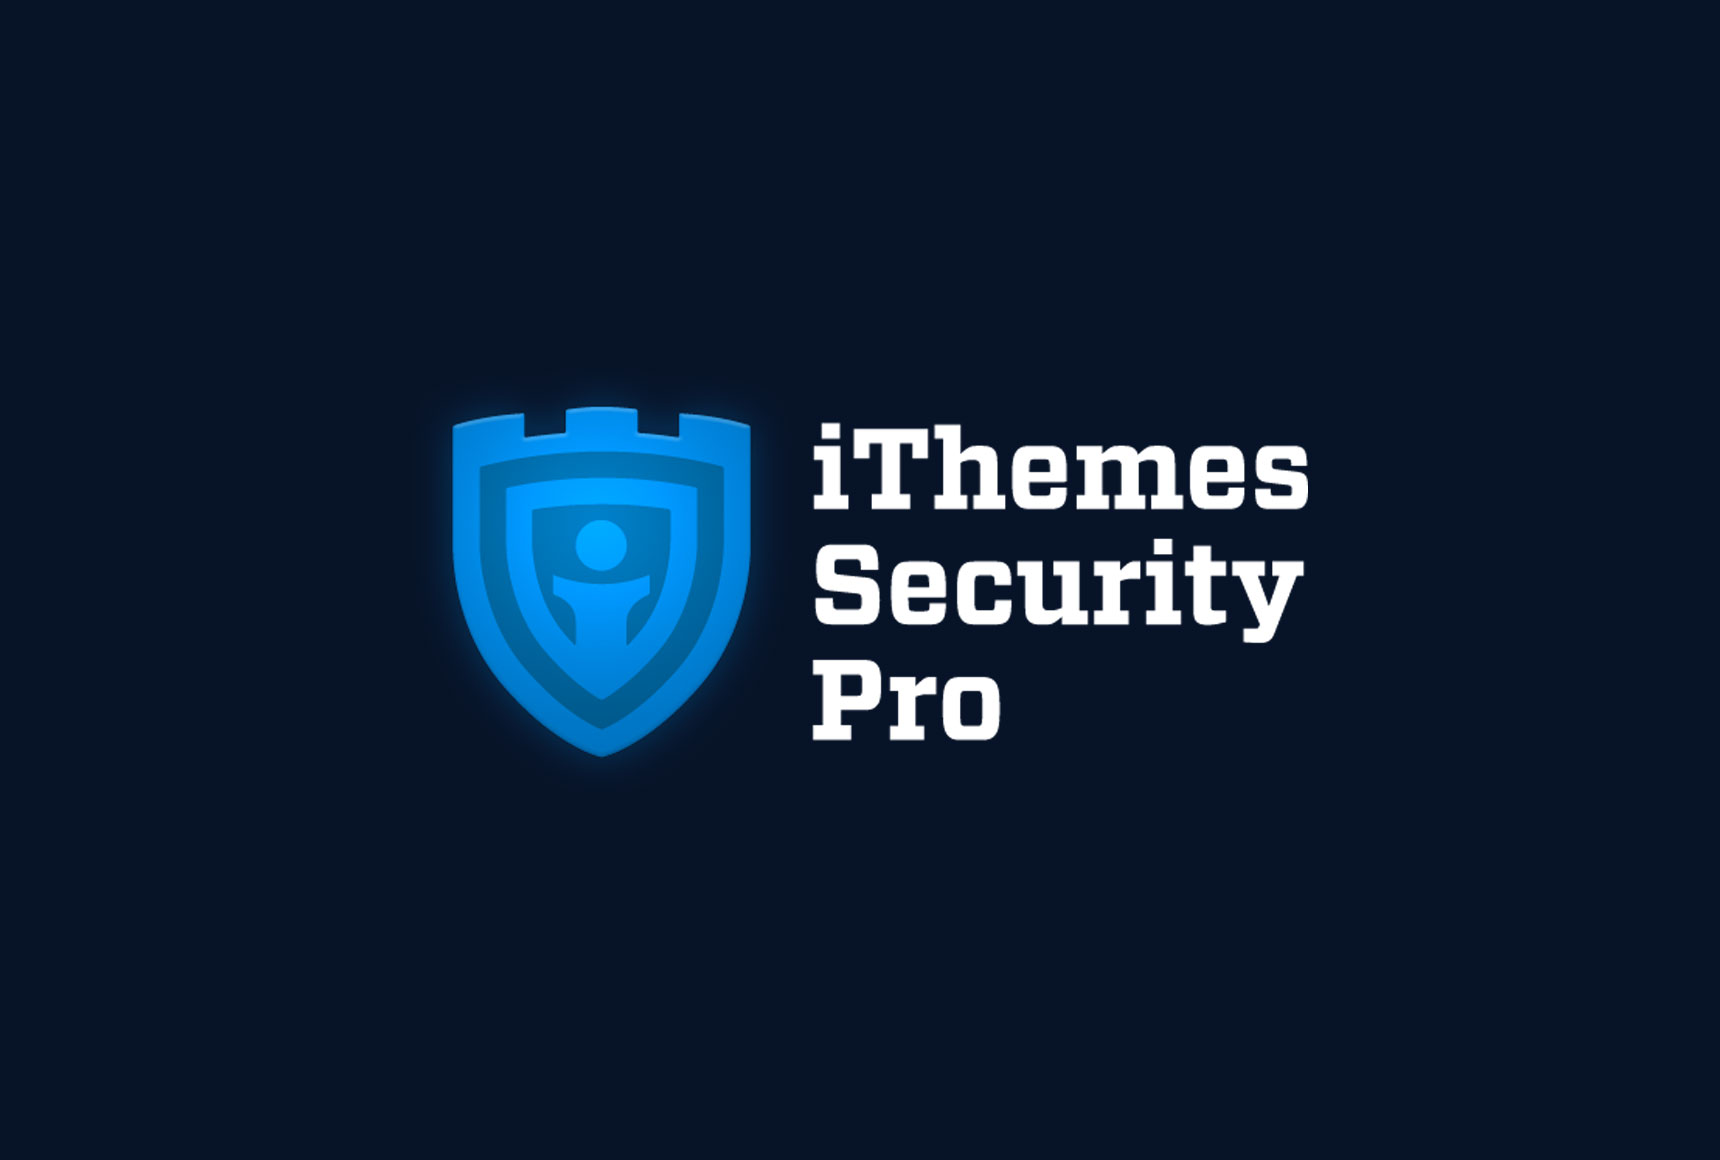 iThemes Security Pro masthead image